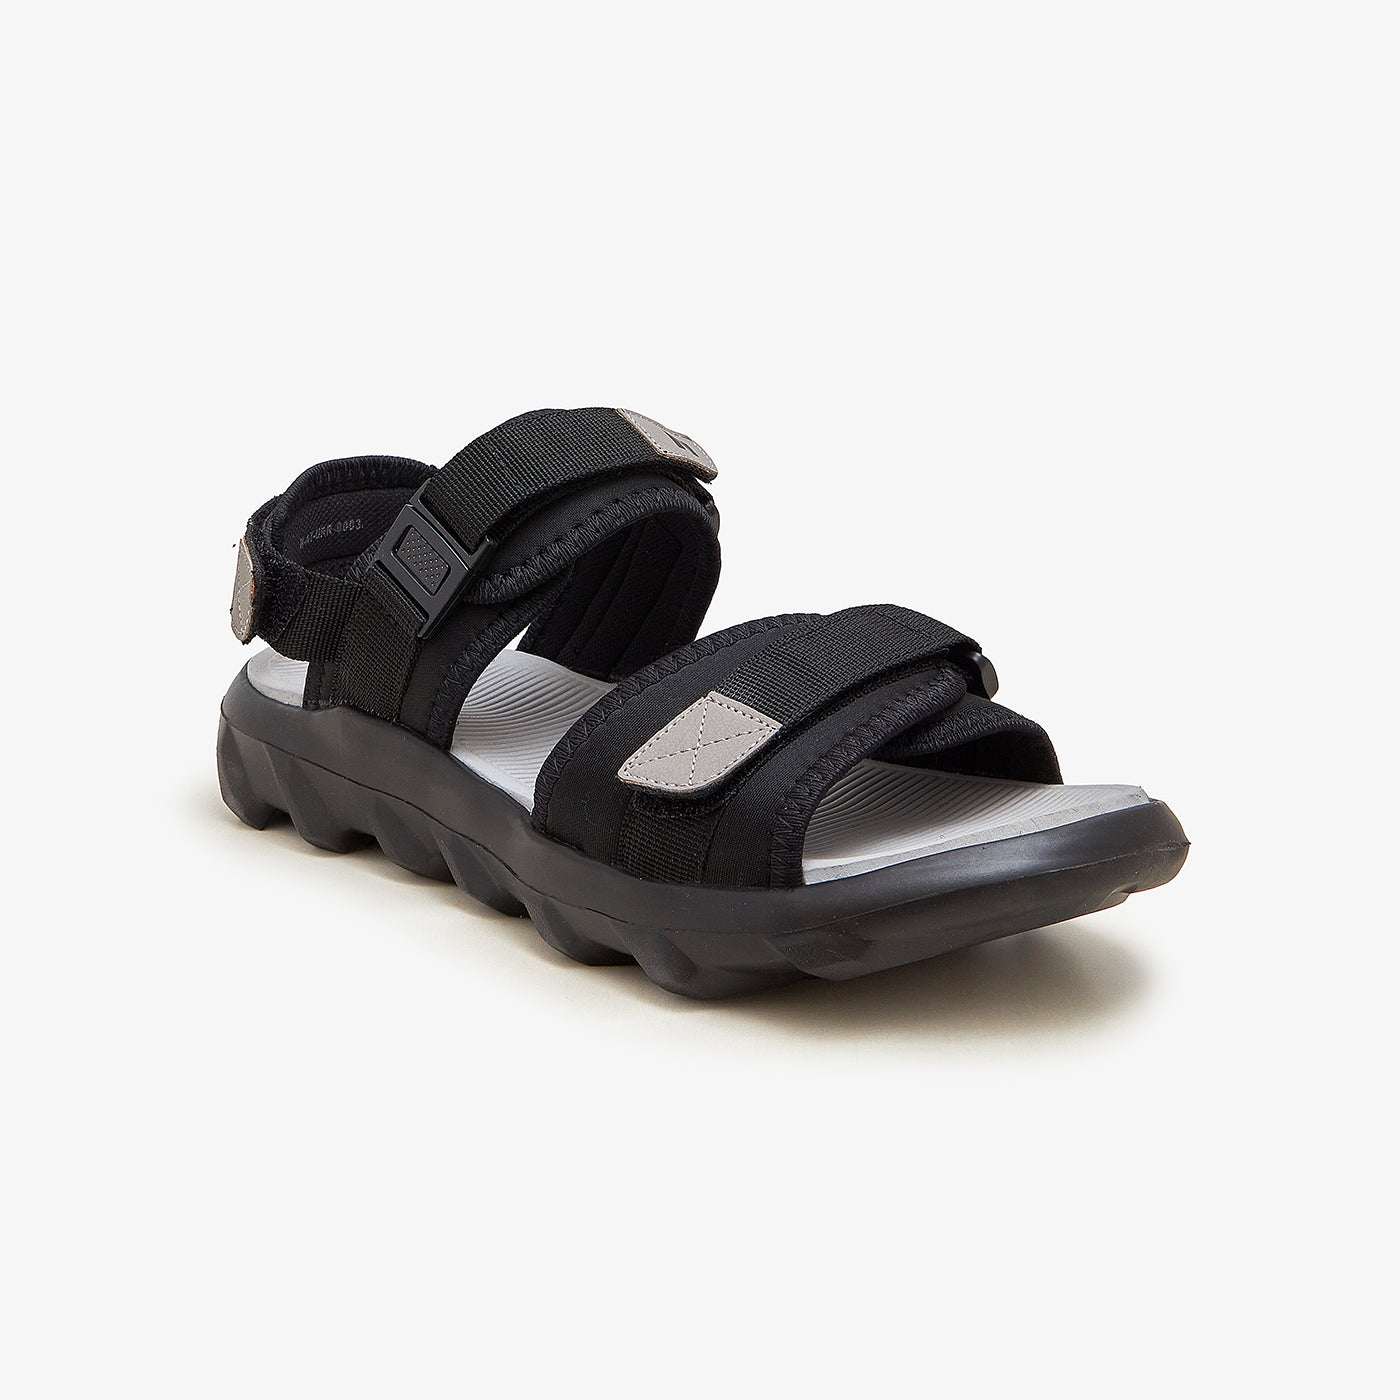 Men's Stylish Summer Sandals